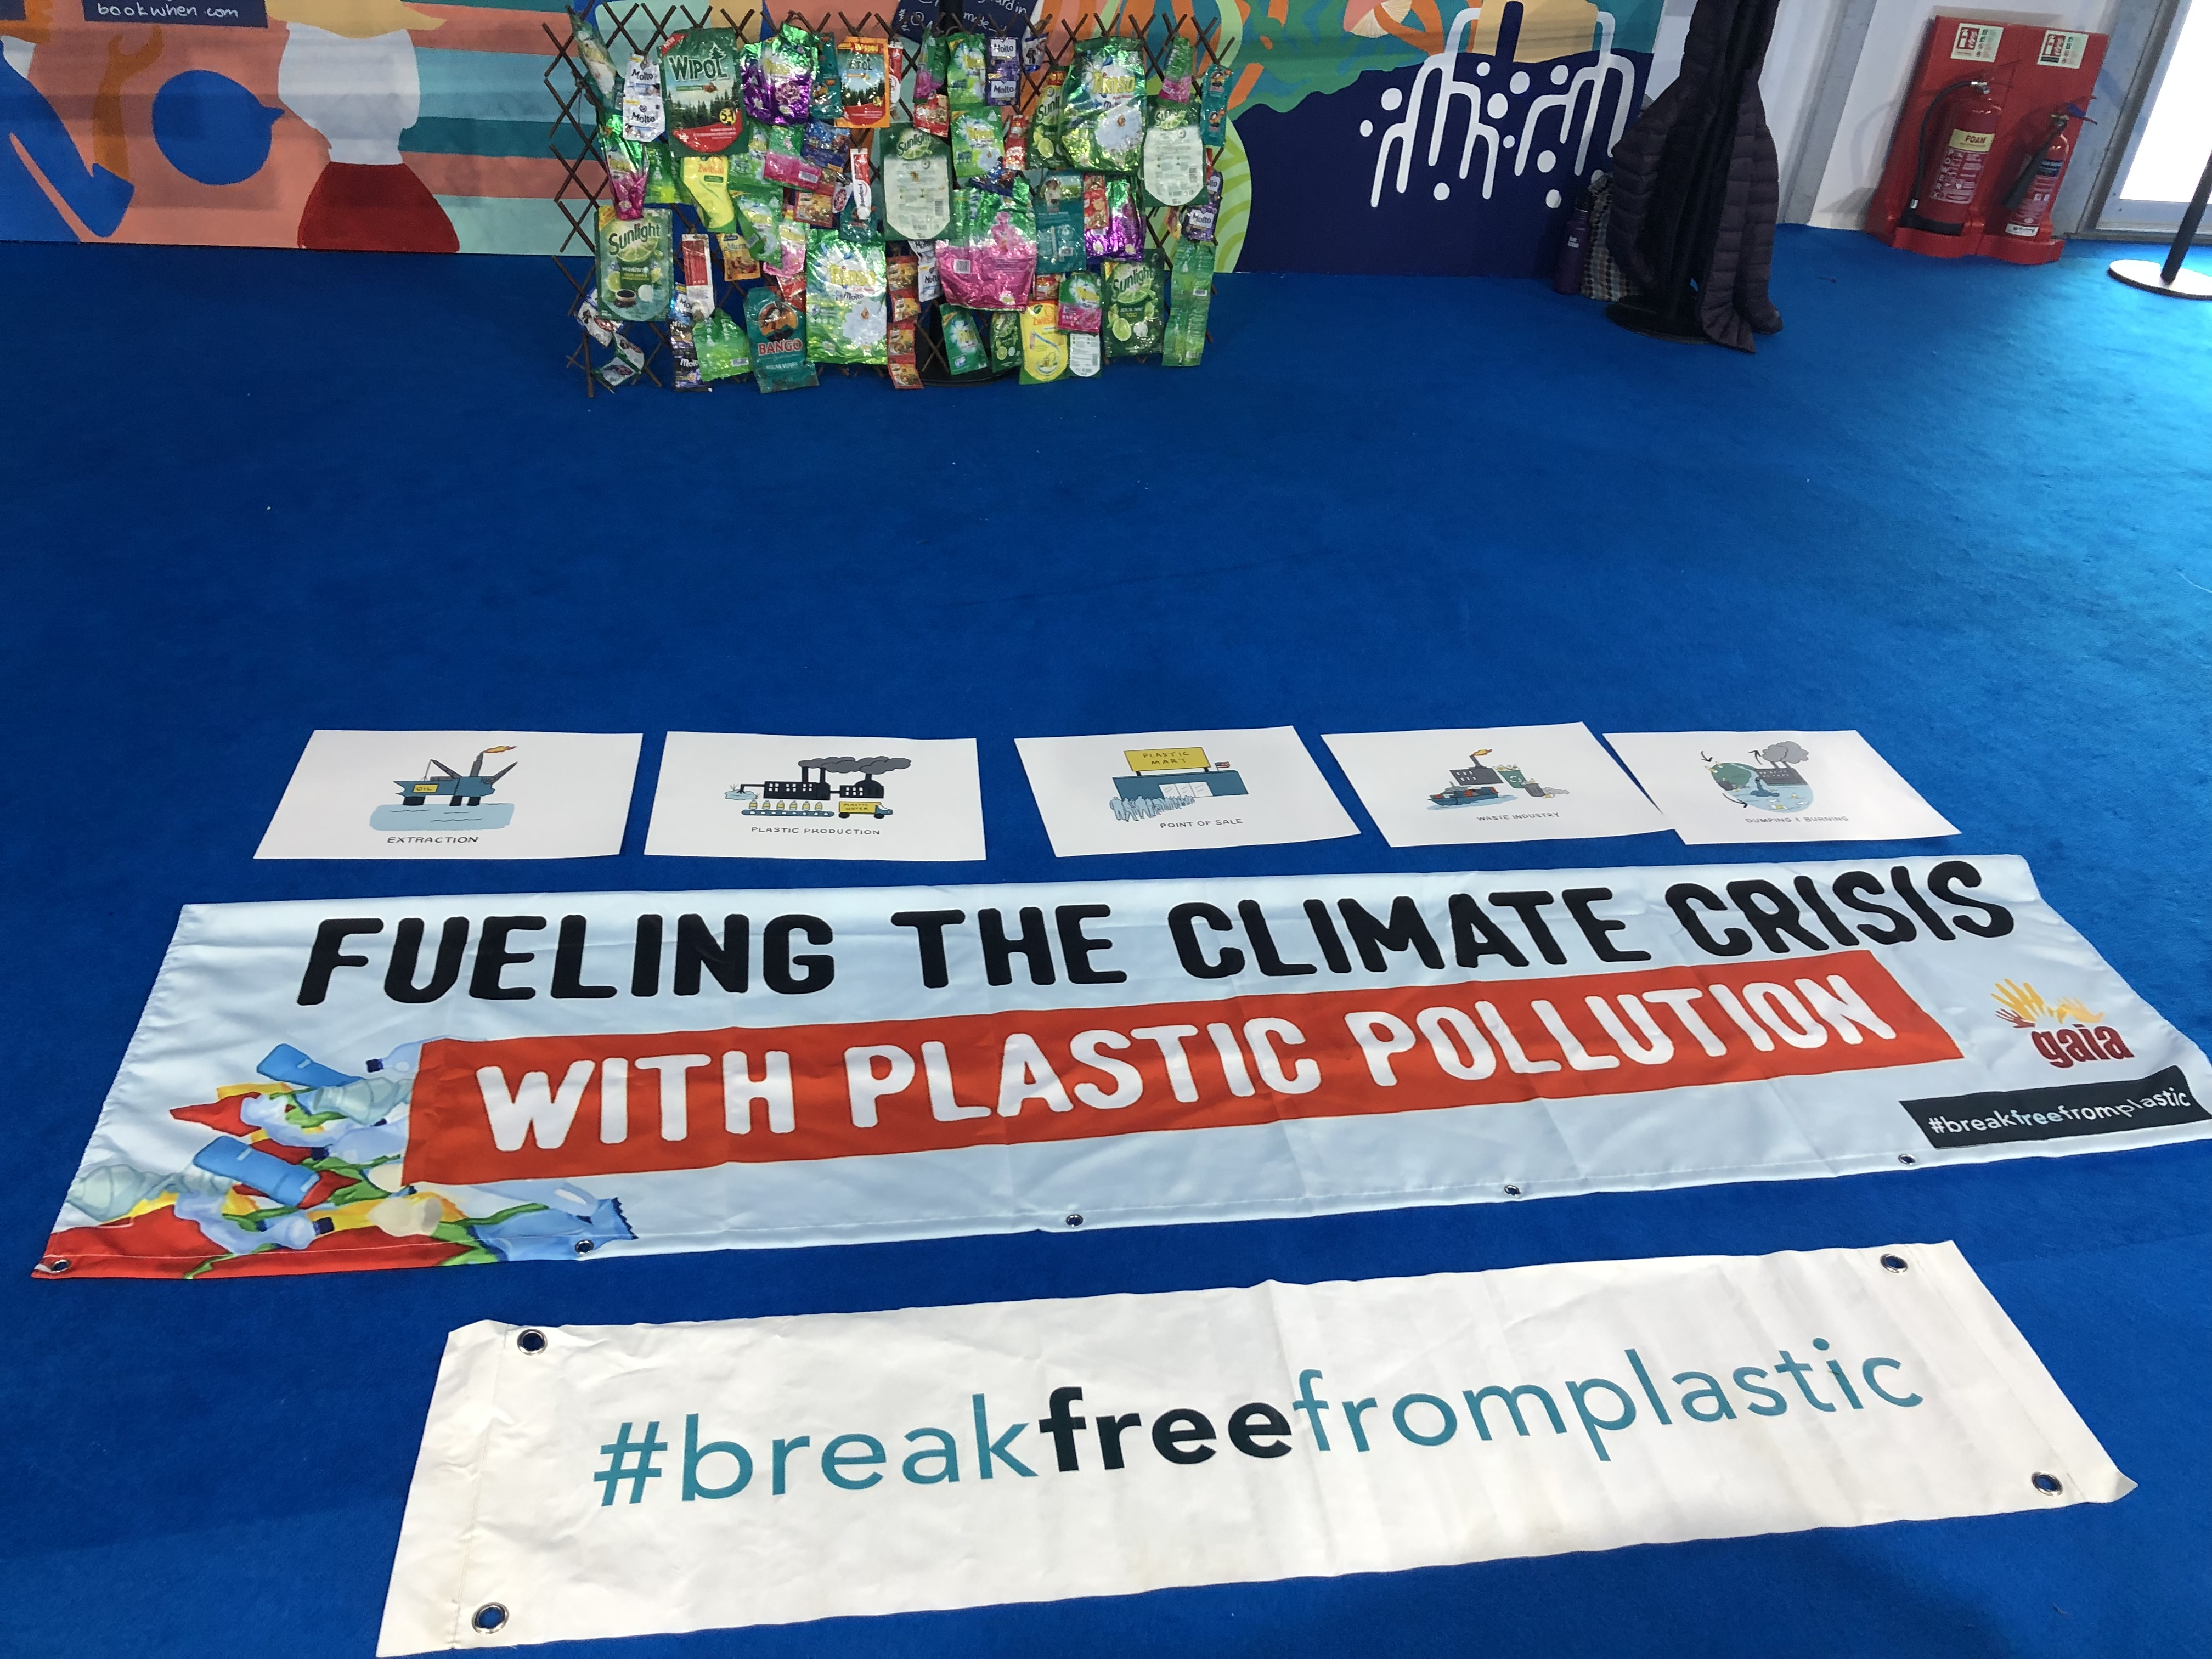 COP26 Action - Break Free From Plastic